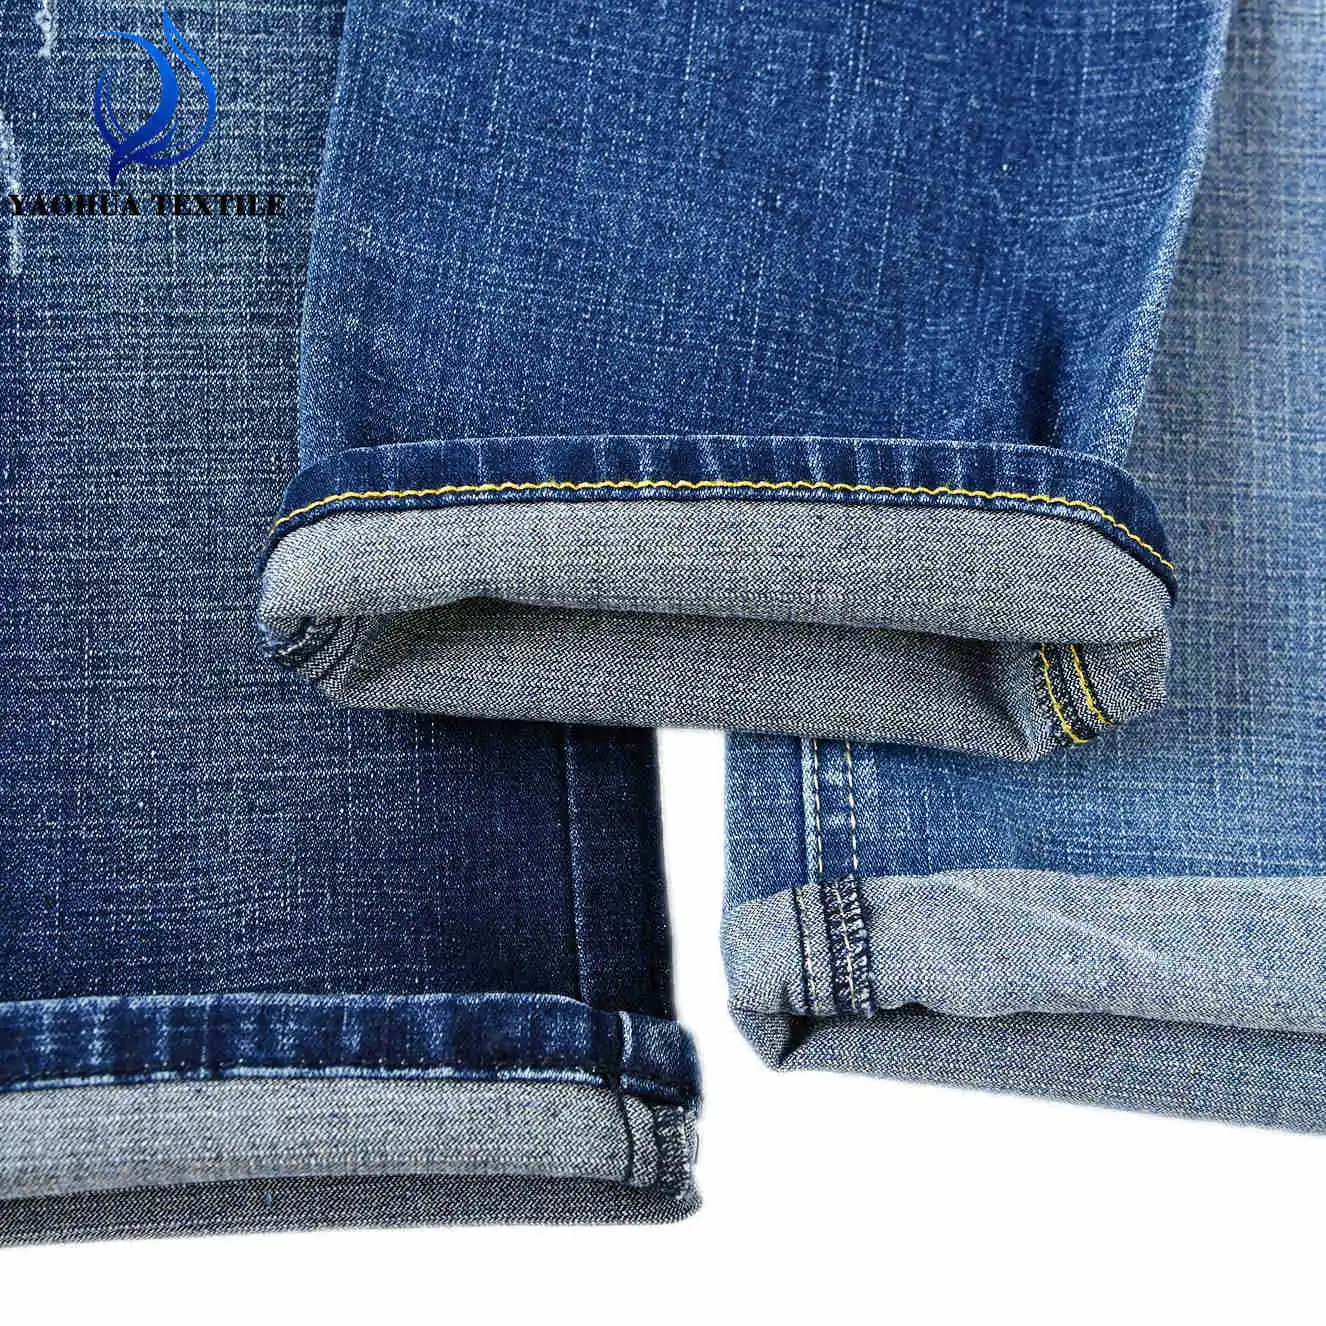 325 coton polyester spandex denim tissu pour jeans et vestes OE denim tissu